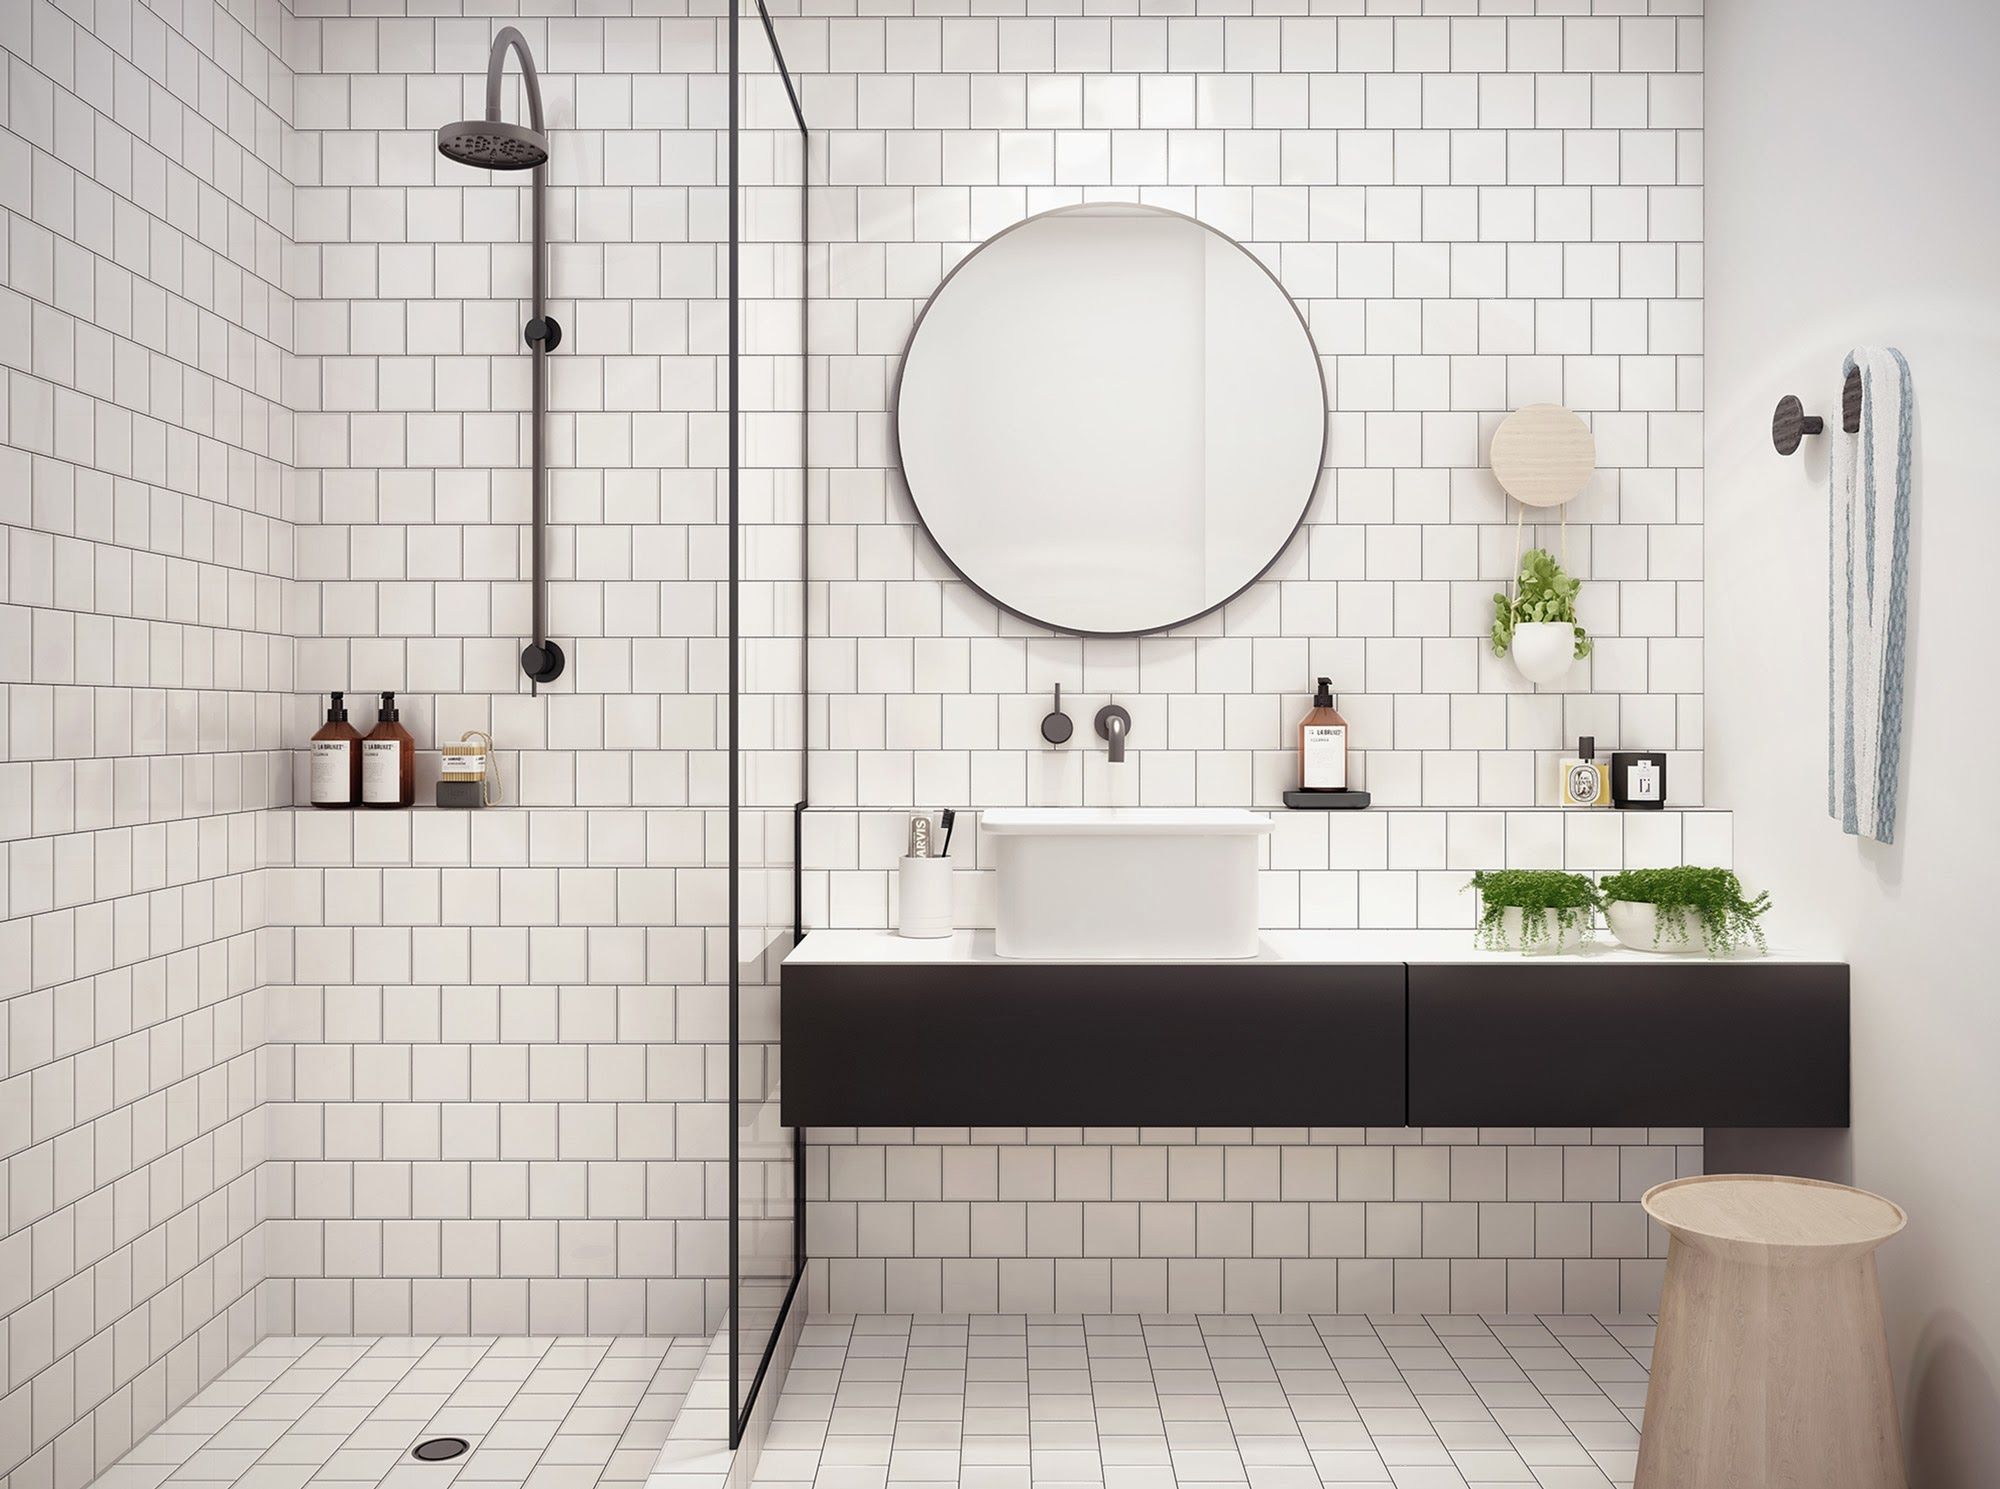 Bathroom Dilemmas | Wall Panels vs Tiles - Which Is Best?